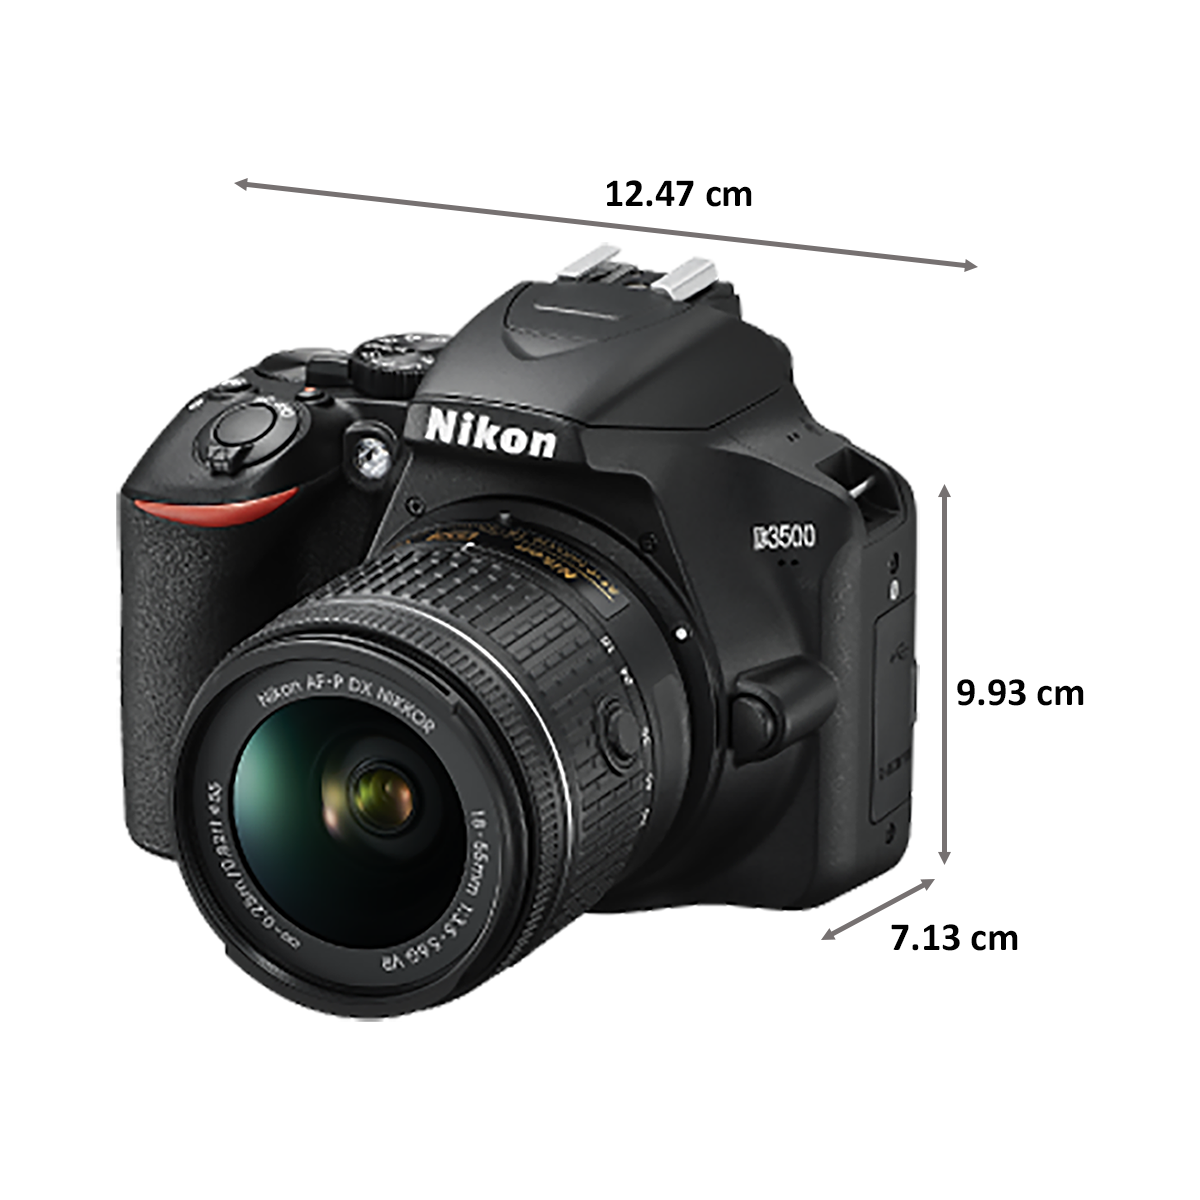 Nikon 24.2 MP DSLR Camera Body with 18 - 55 mm Lens (D3500, Black)_2